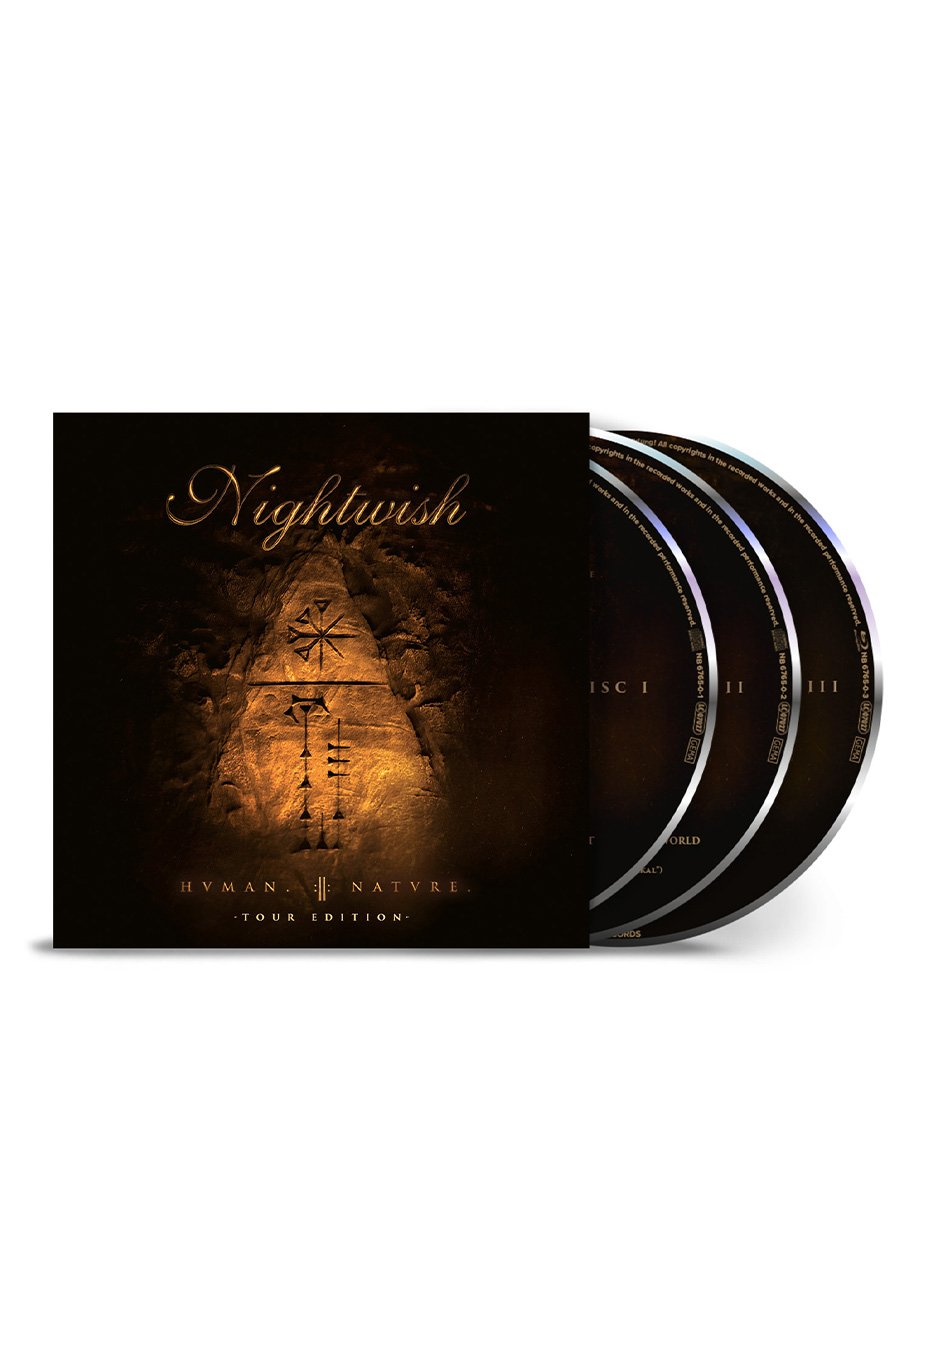 Nightwish - Human. :II: Nature. (Ltd. Tour Edition) - Digipak 2 CD + Blu Ray